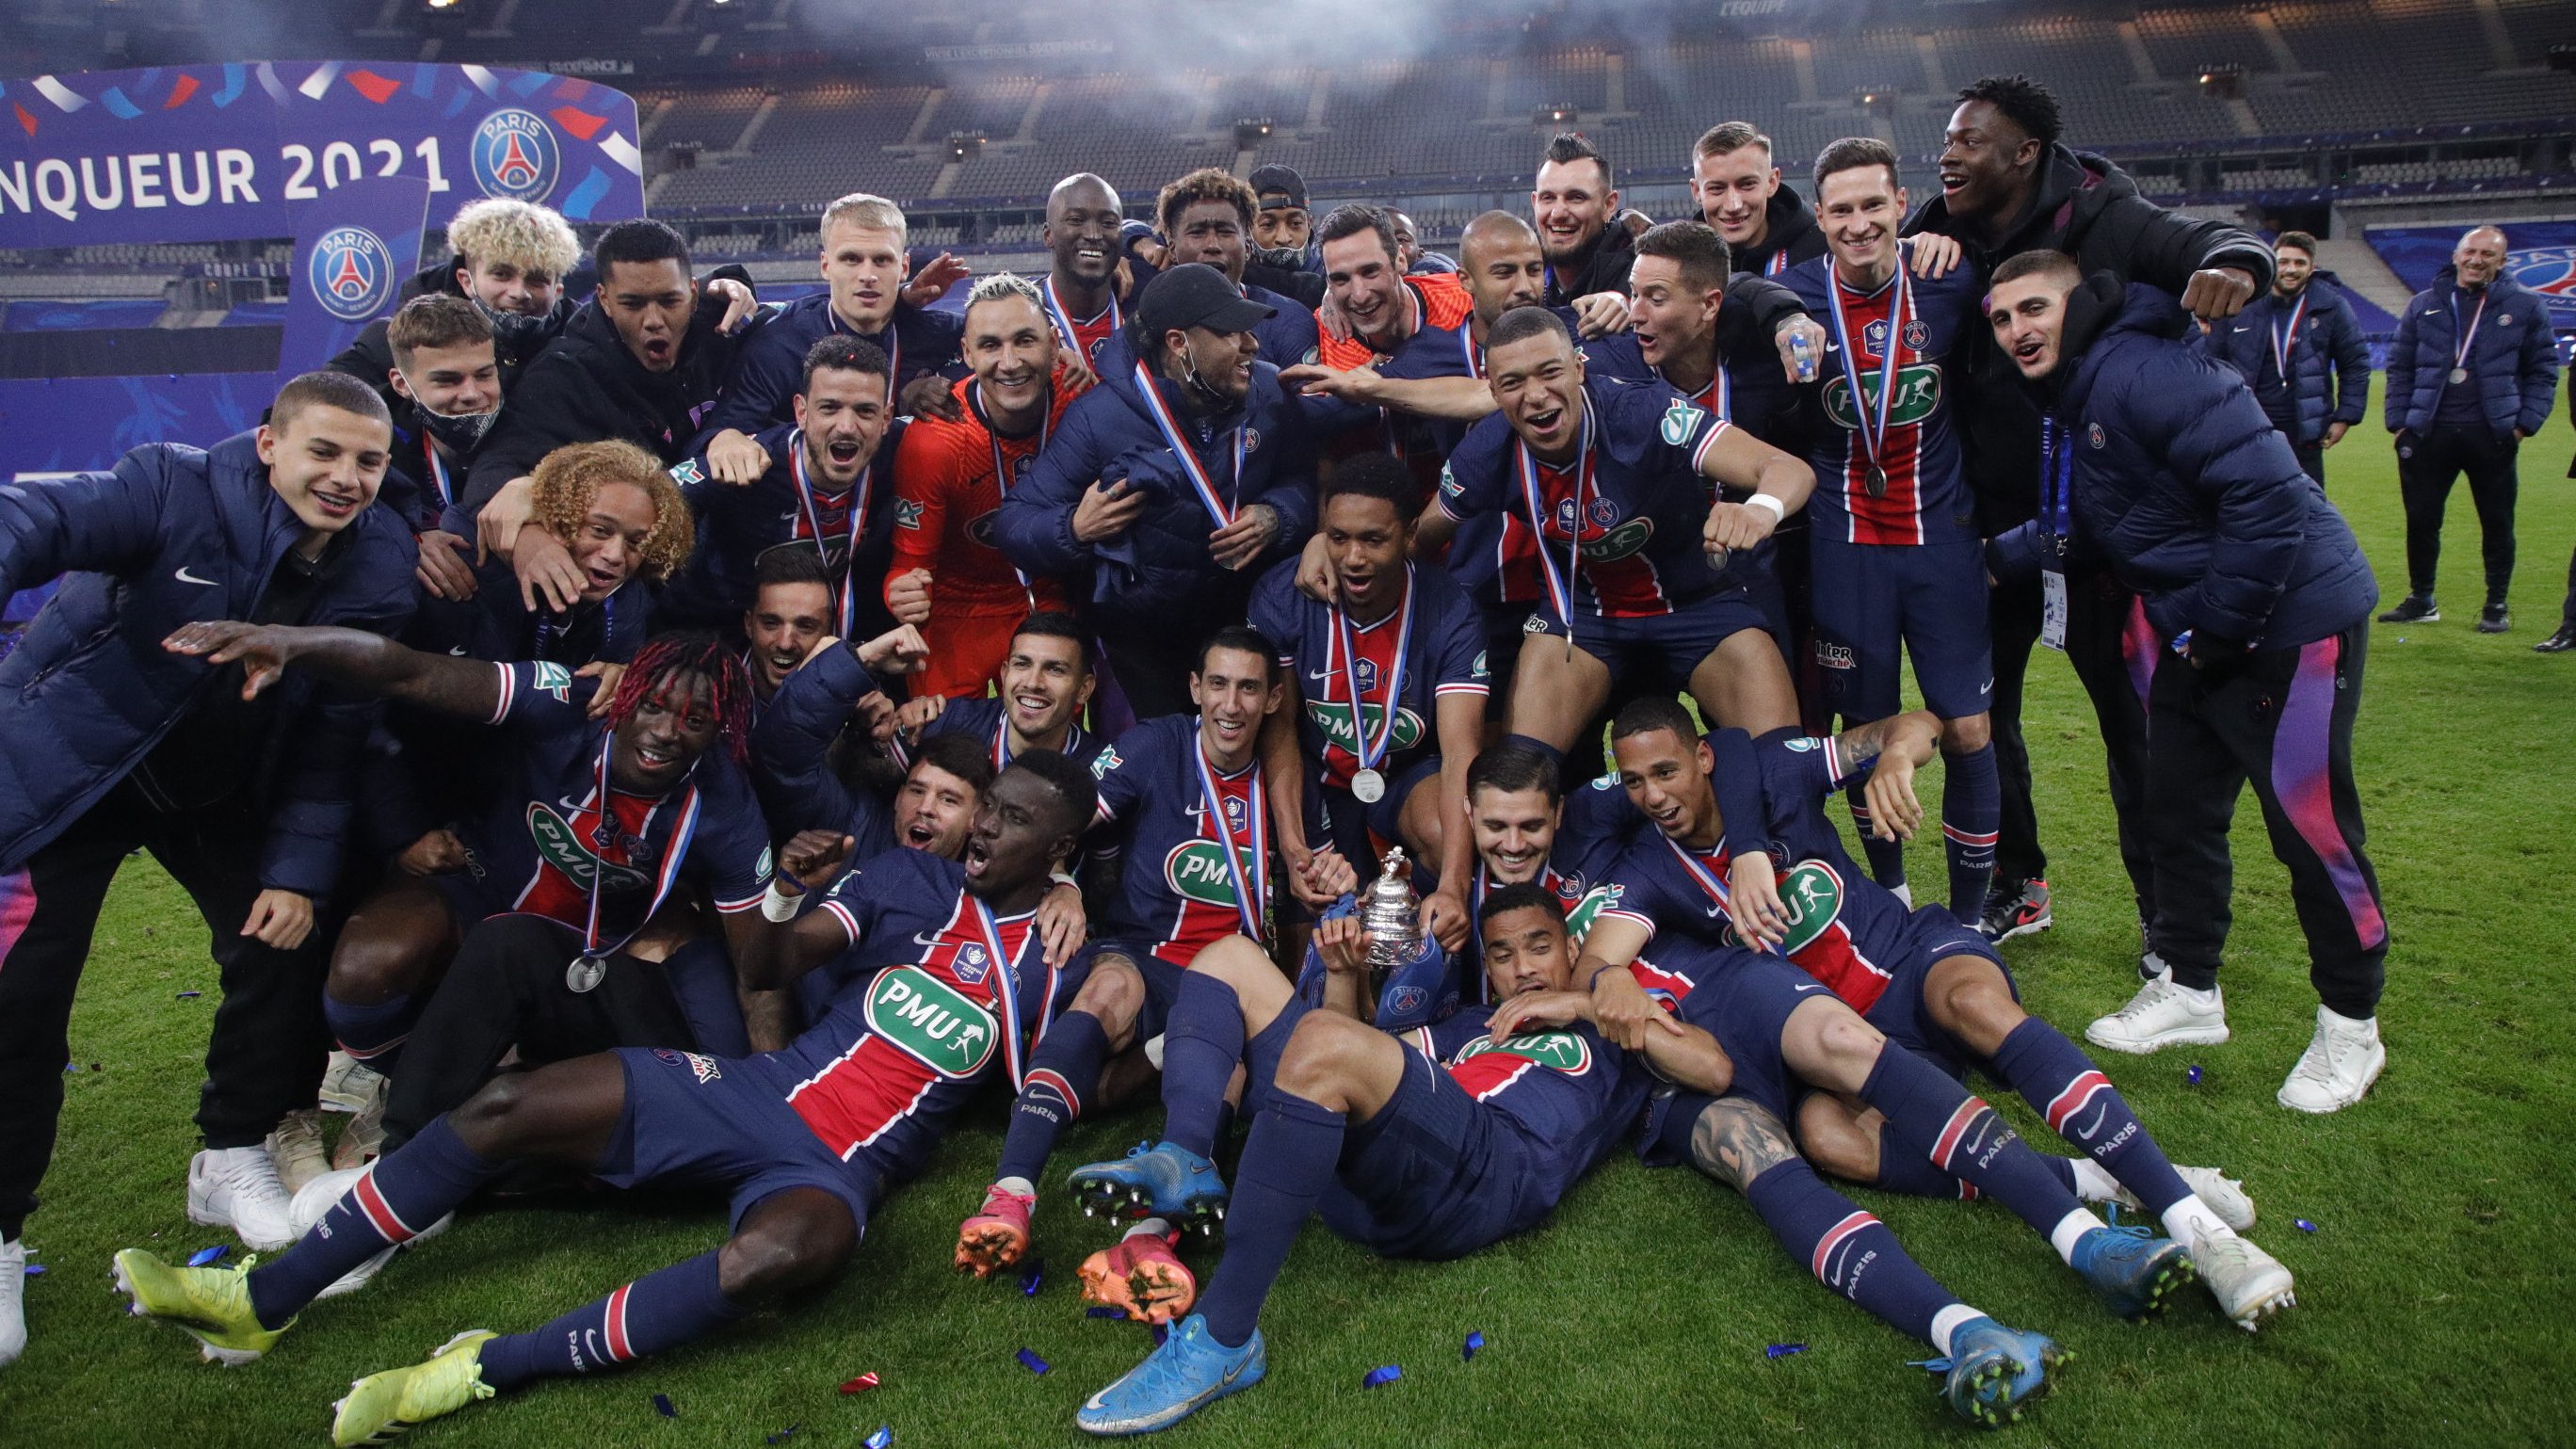 VIDEO: Melihat Lebih Dekat Momen Selebrasi Paris Saint-Germain ketika Juara Piala Prancis